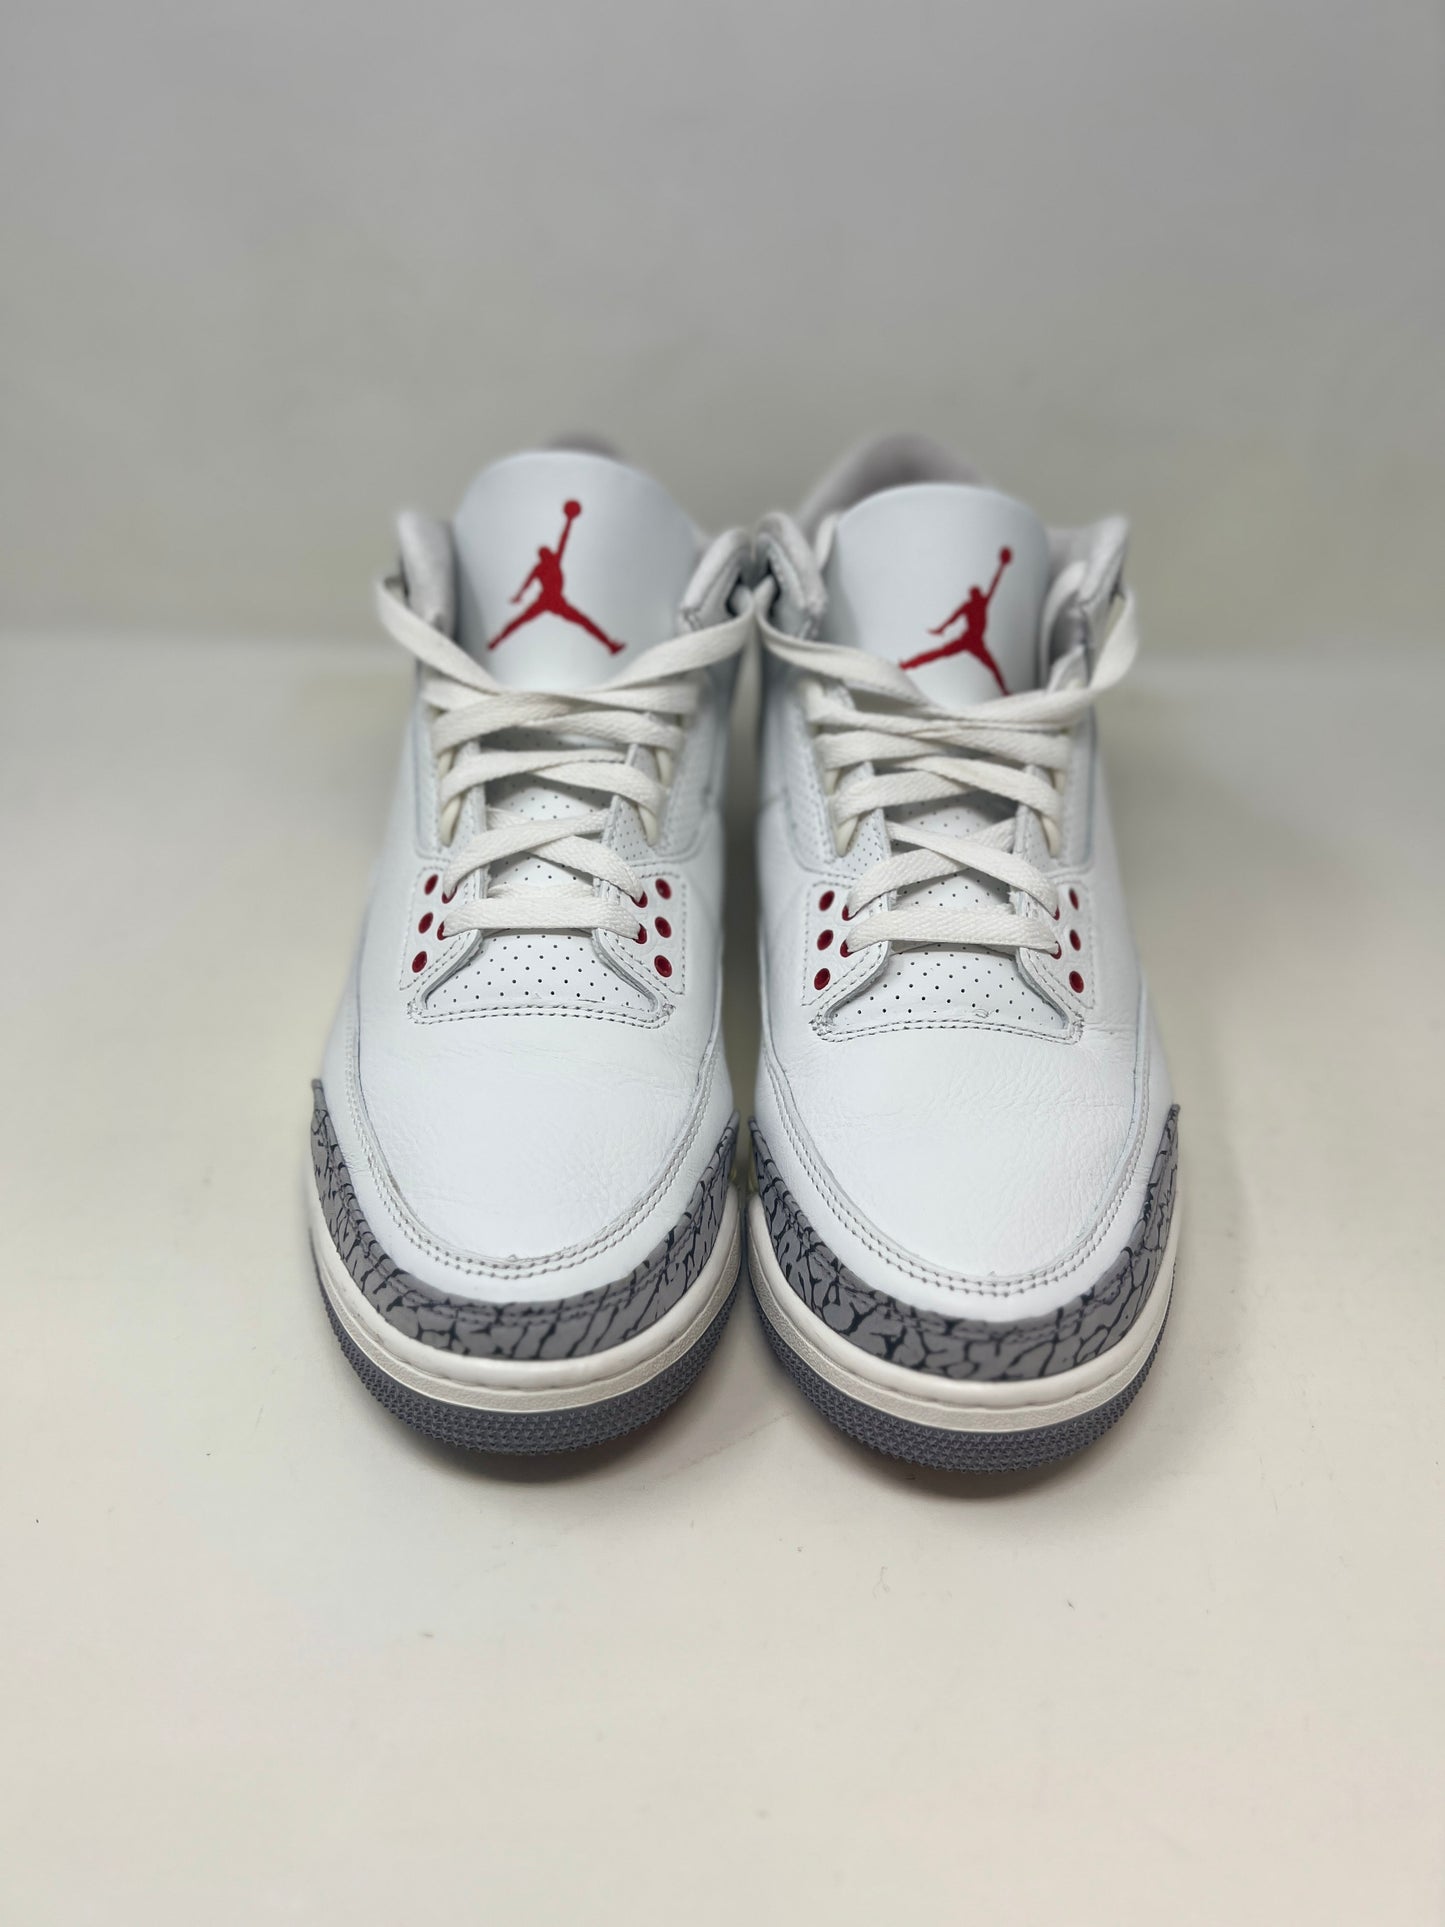 Nike Air Jordan 3 Retro ‘White Cement Reimagined’ Used